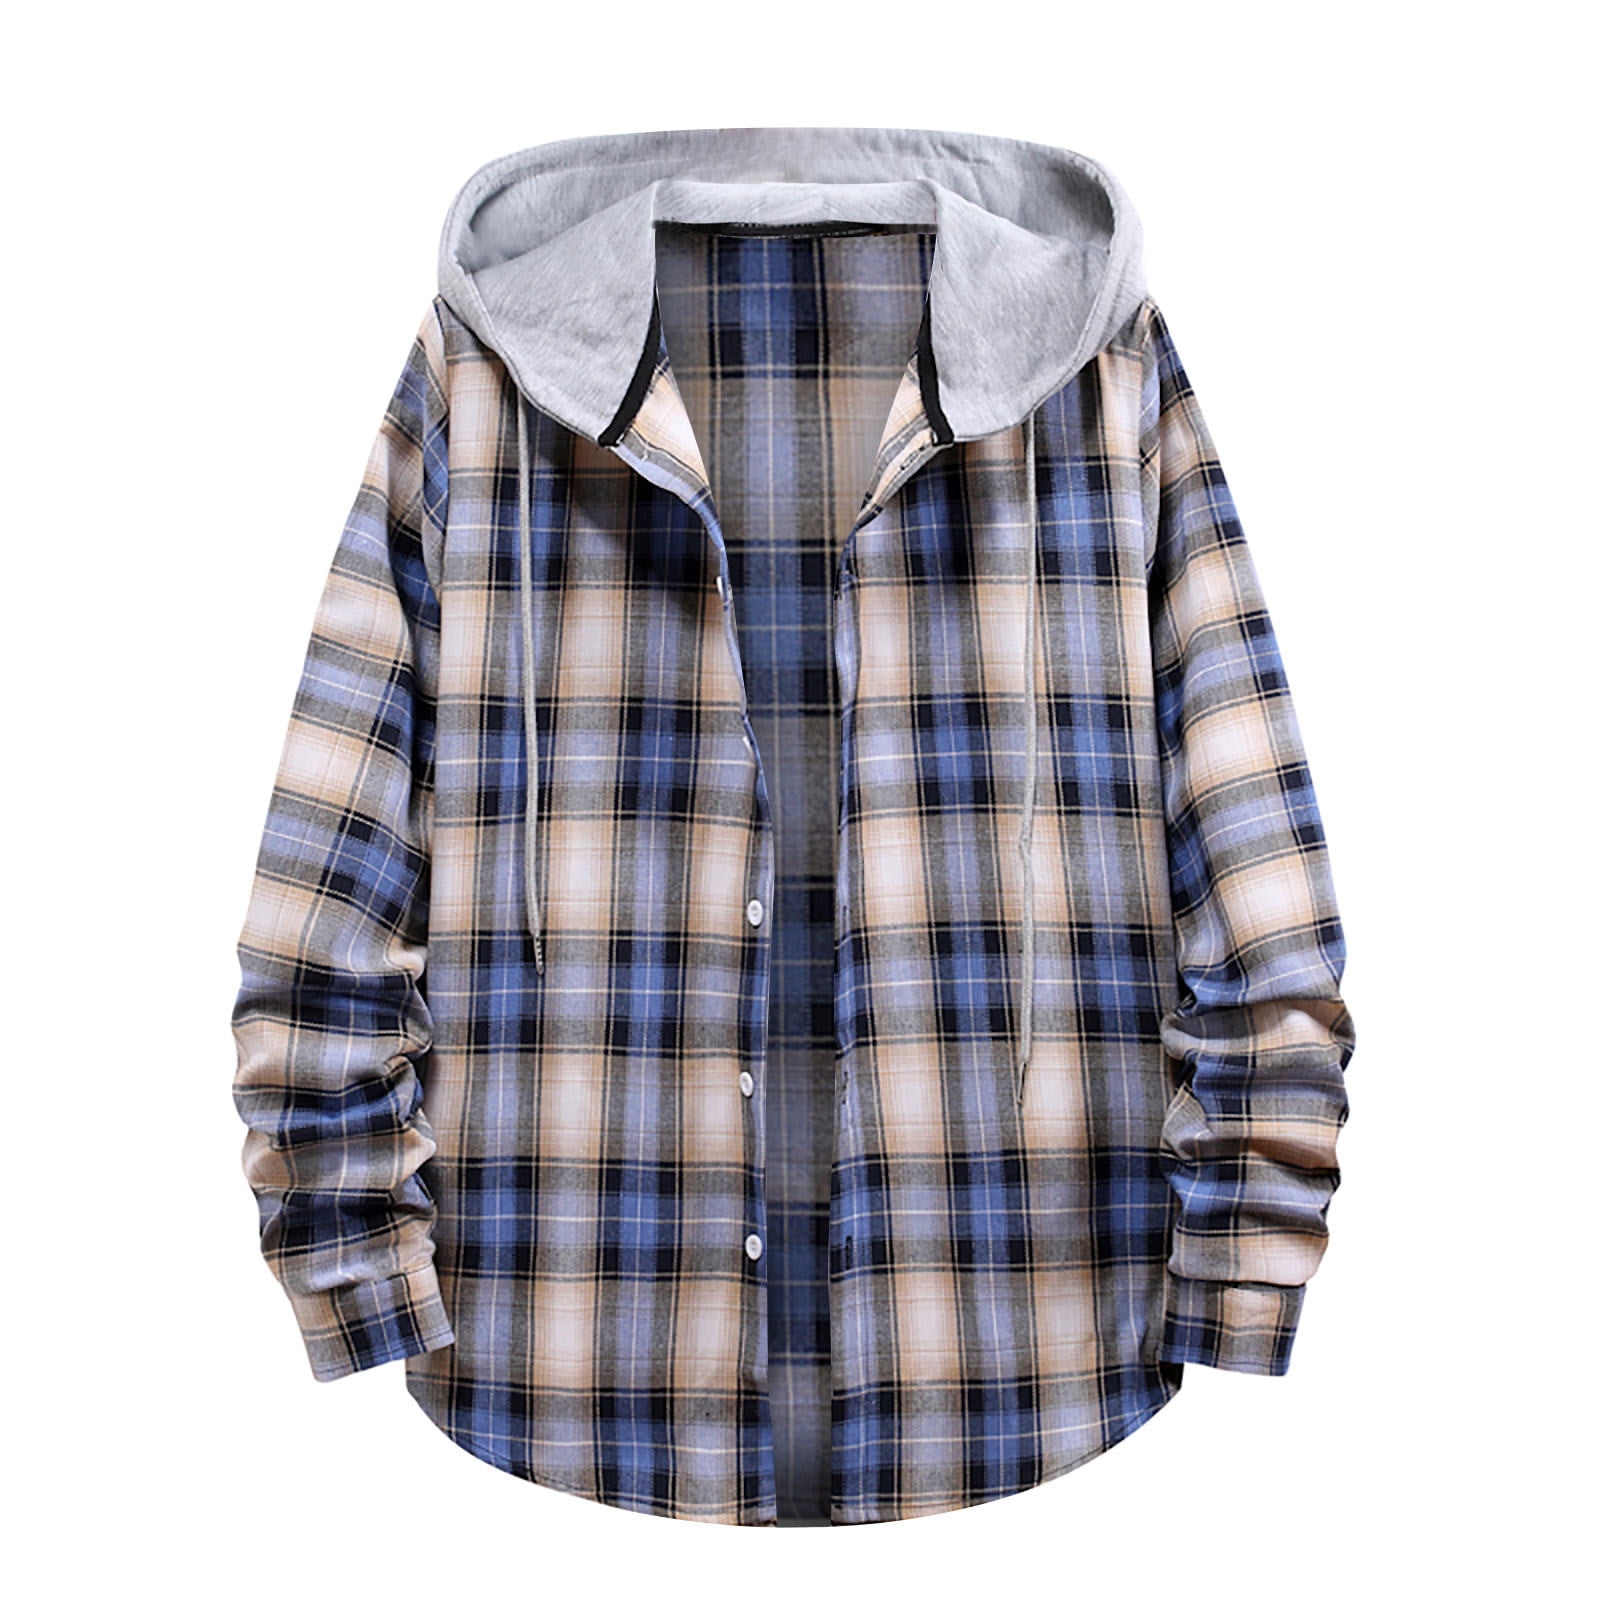 XFLWAM Men's Flannel Hoodie Plaid Shirts Jacket Casual Long Sleeve ...